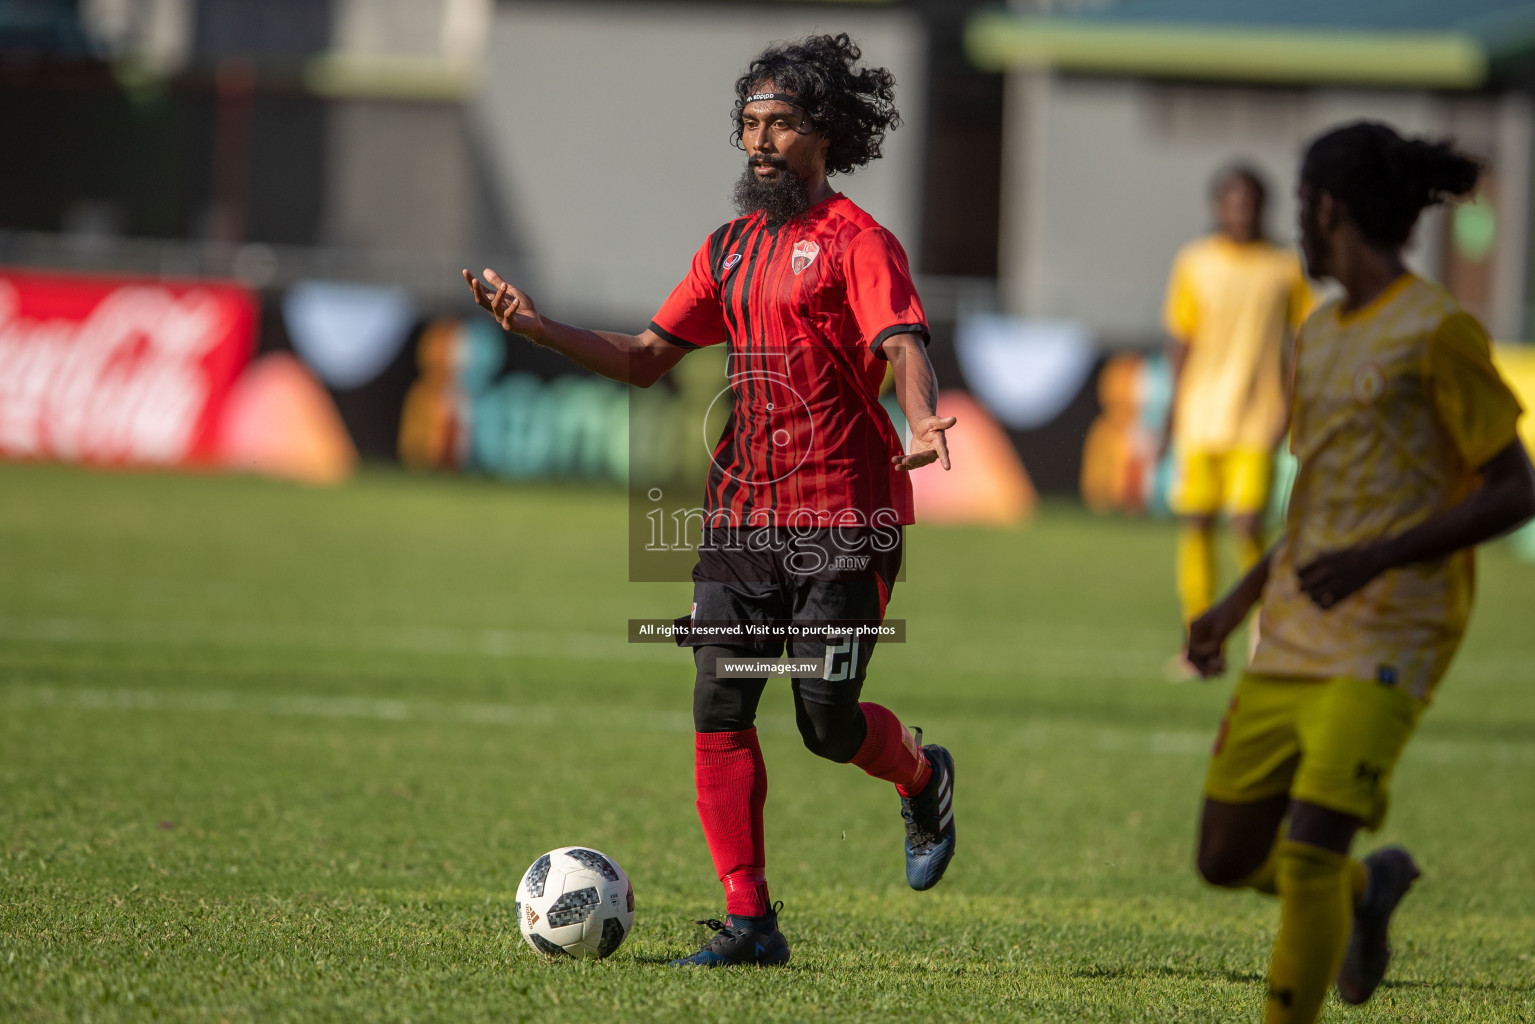 TC Sports Club vs Victory Sports Club in Dhiraagu Dhivehi League 2019 held in Male', Maldives on 15th June. Photos: Suadh Abdul Sattar/images.mv